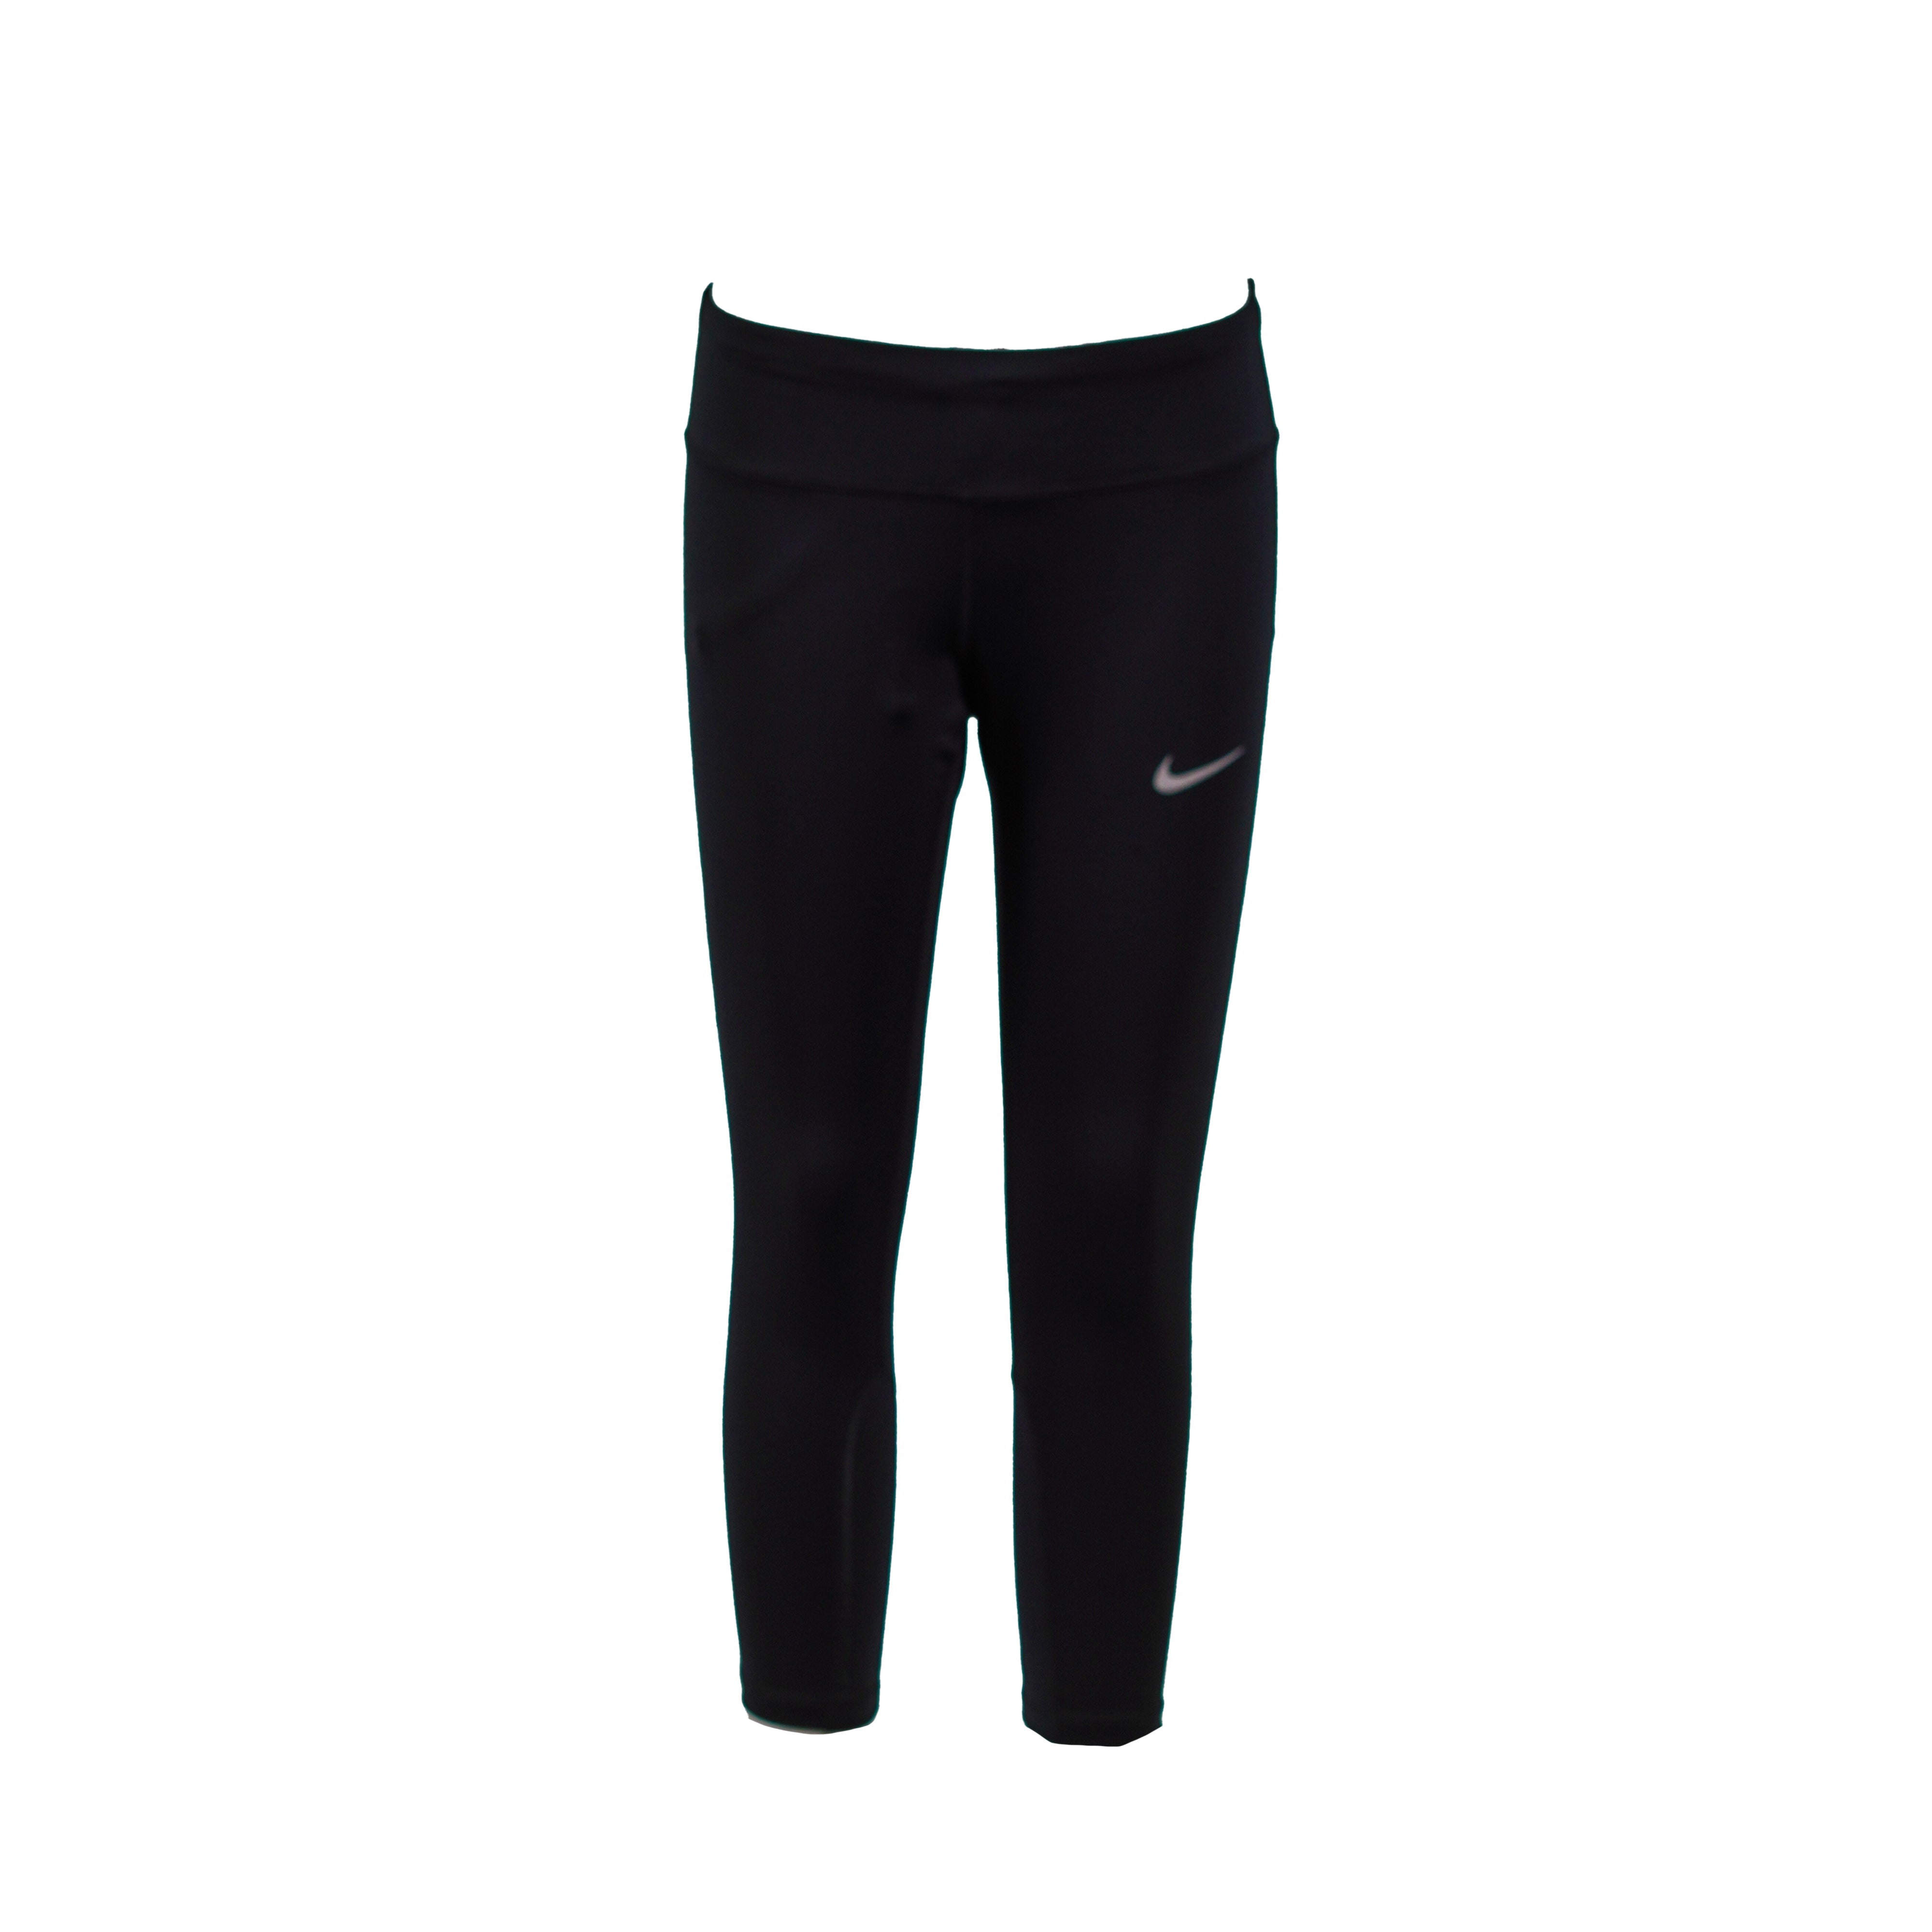 Nike Women's Epic Run Tight Fit Running Capri Tights Black Size